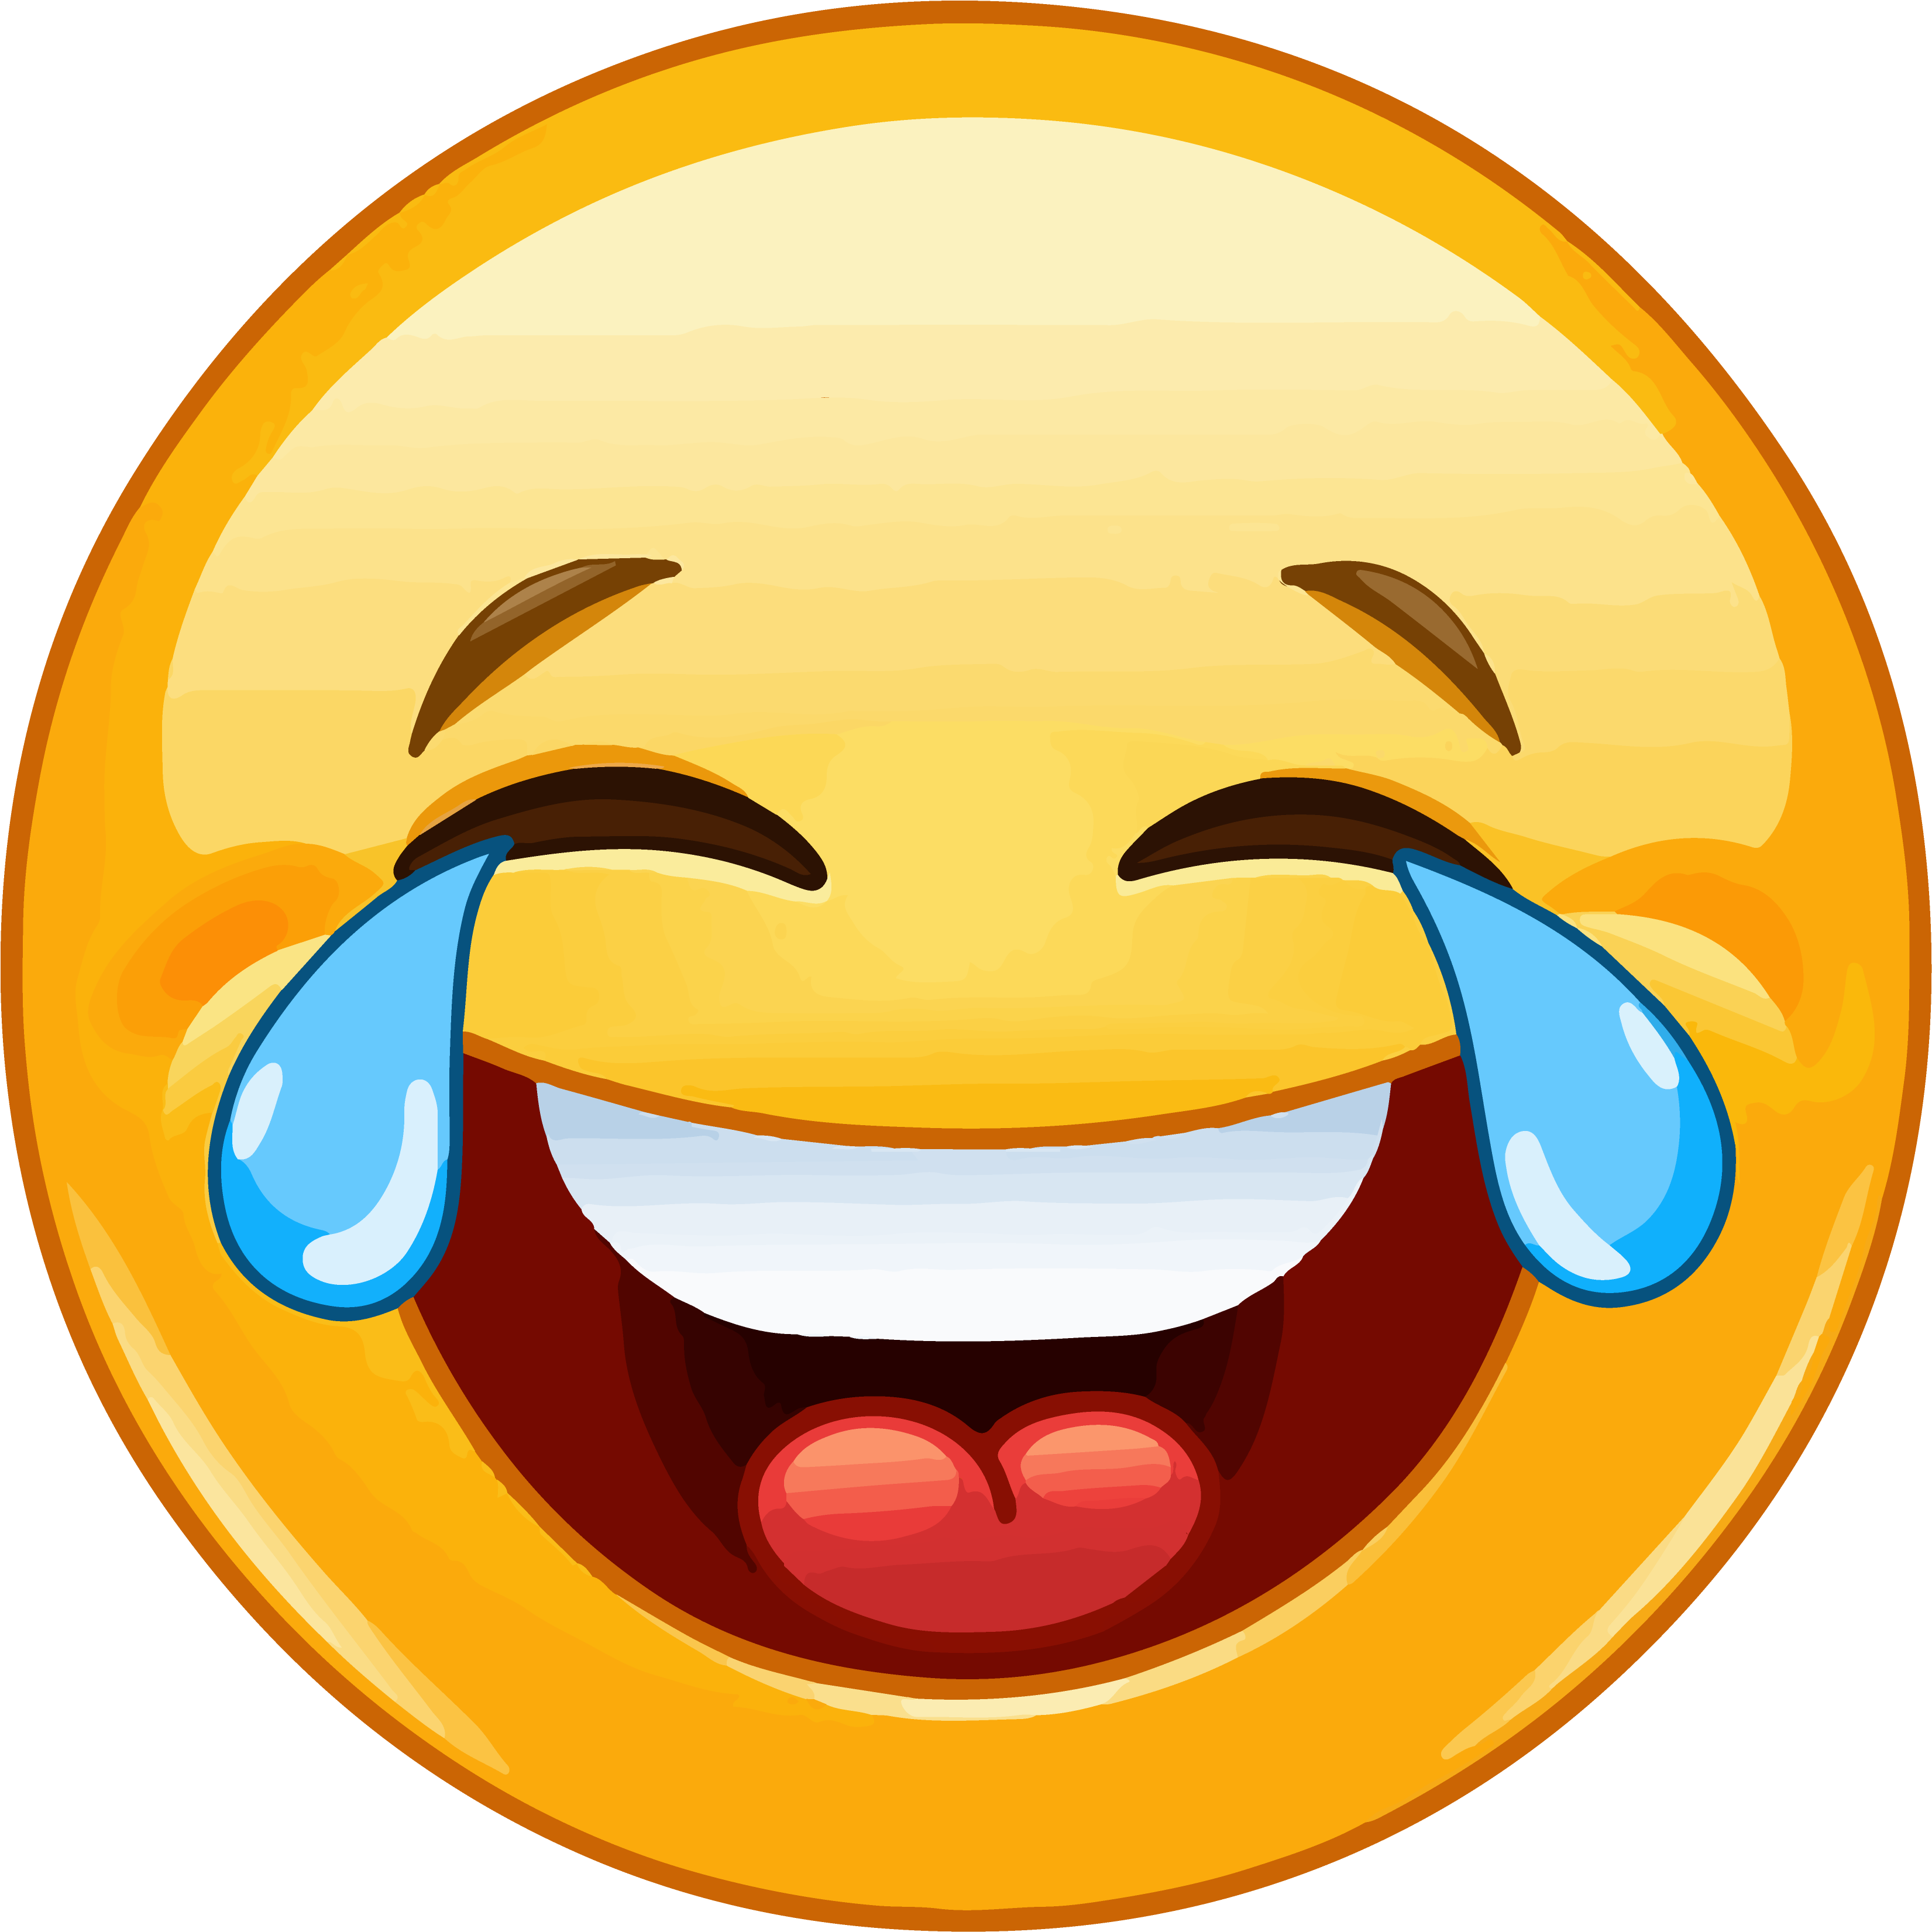 Laugh Emoji PNG Photos